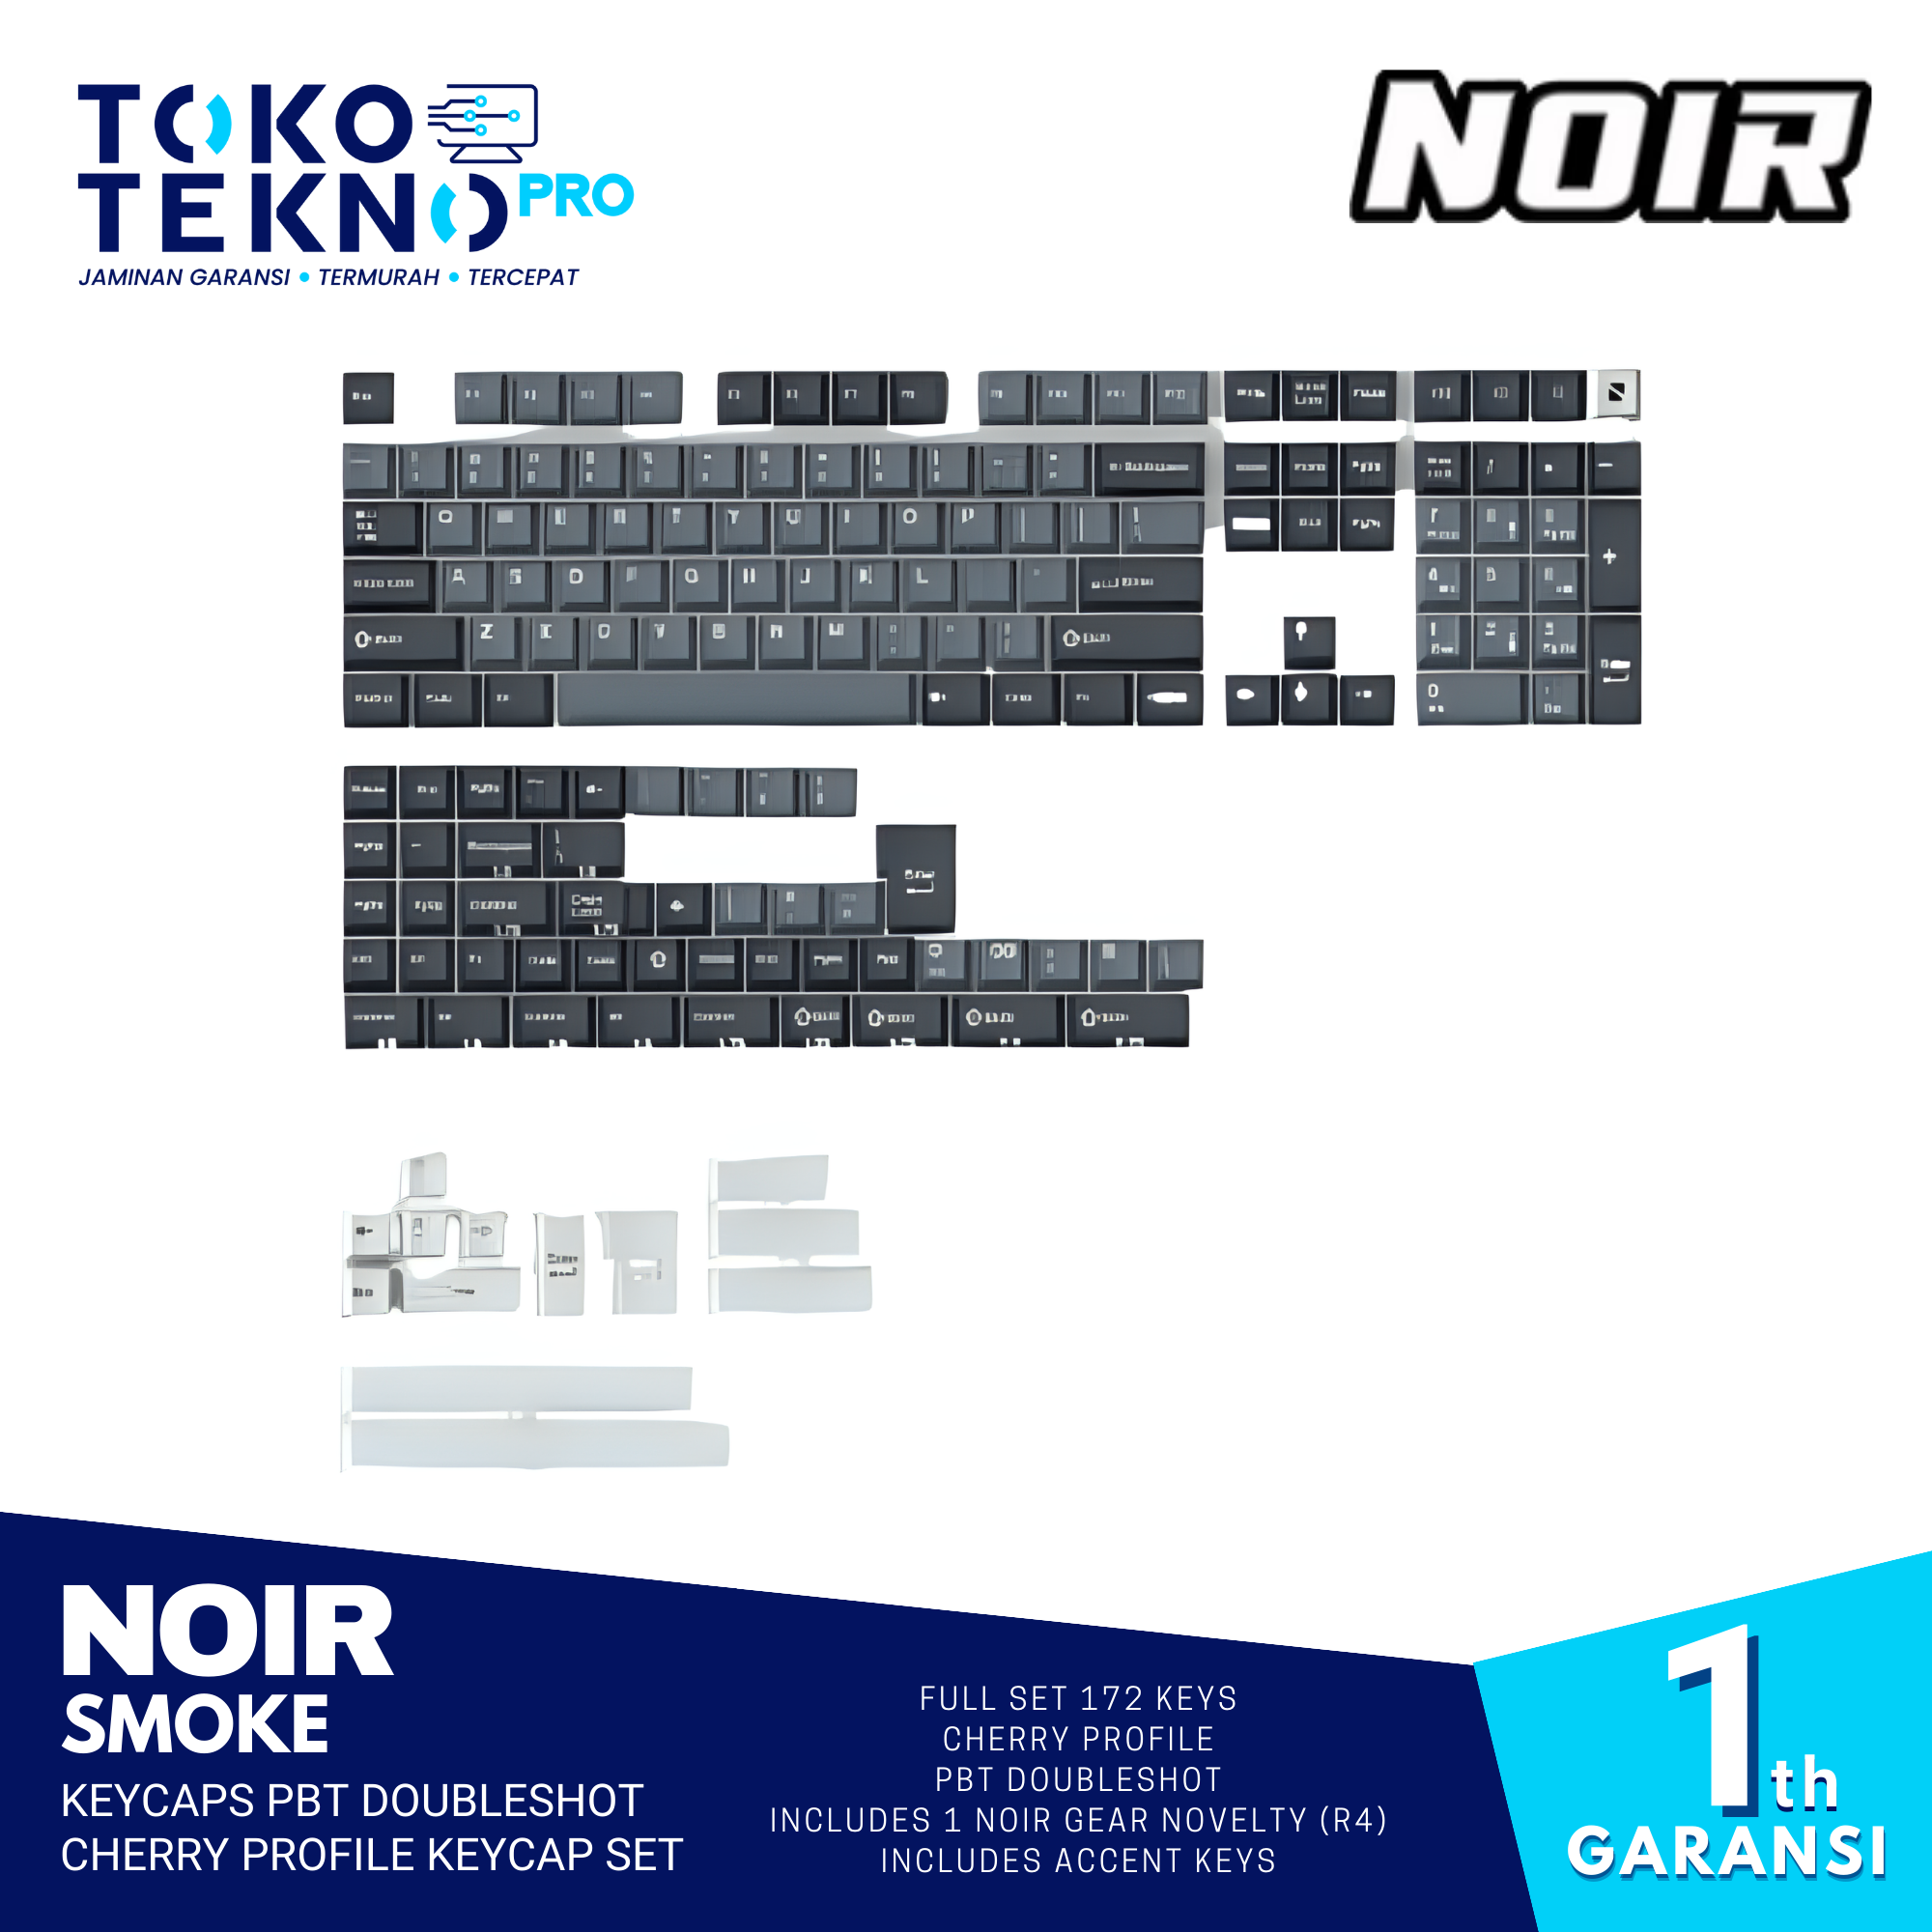 Noir Smoke Keycaps PBT Doubleshot Cherry Profile Keycap Set